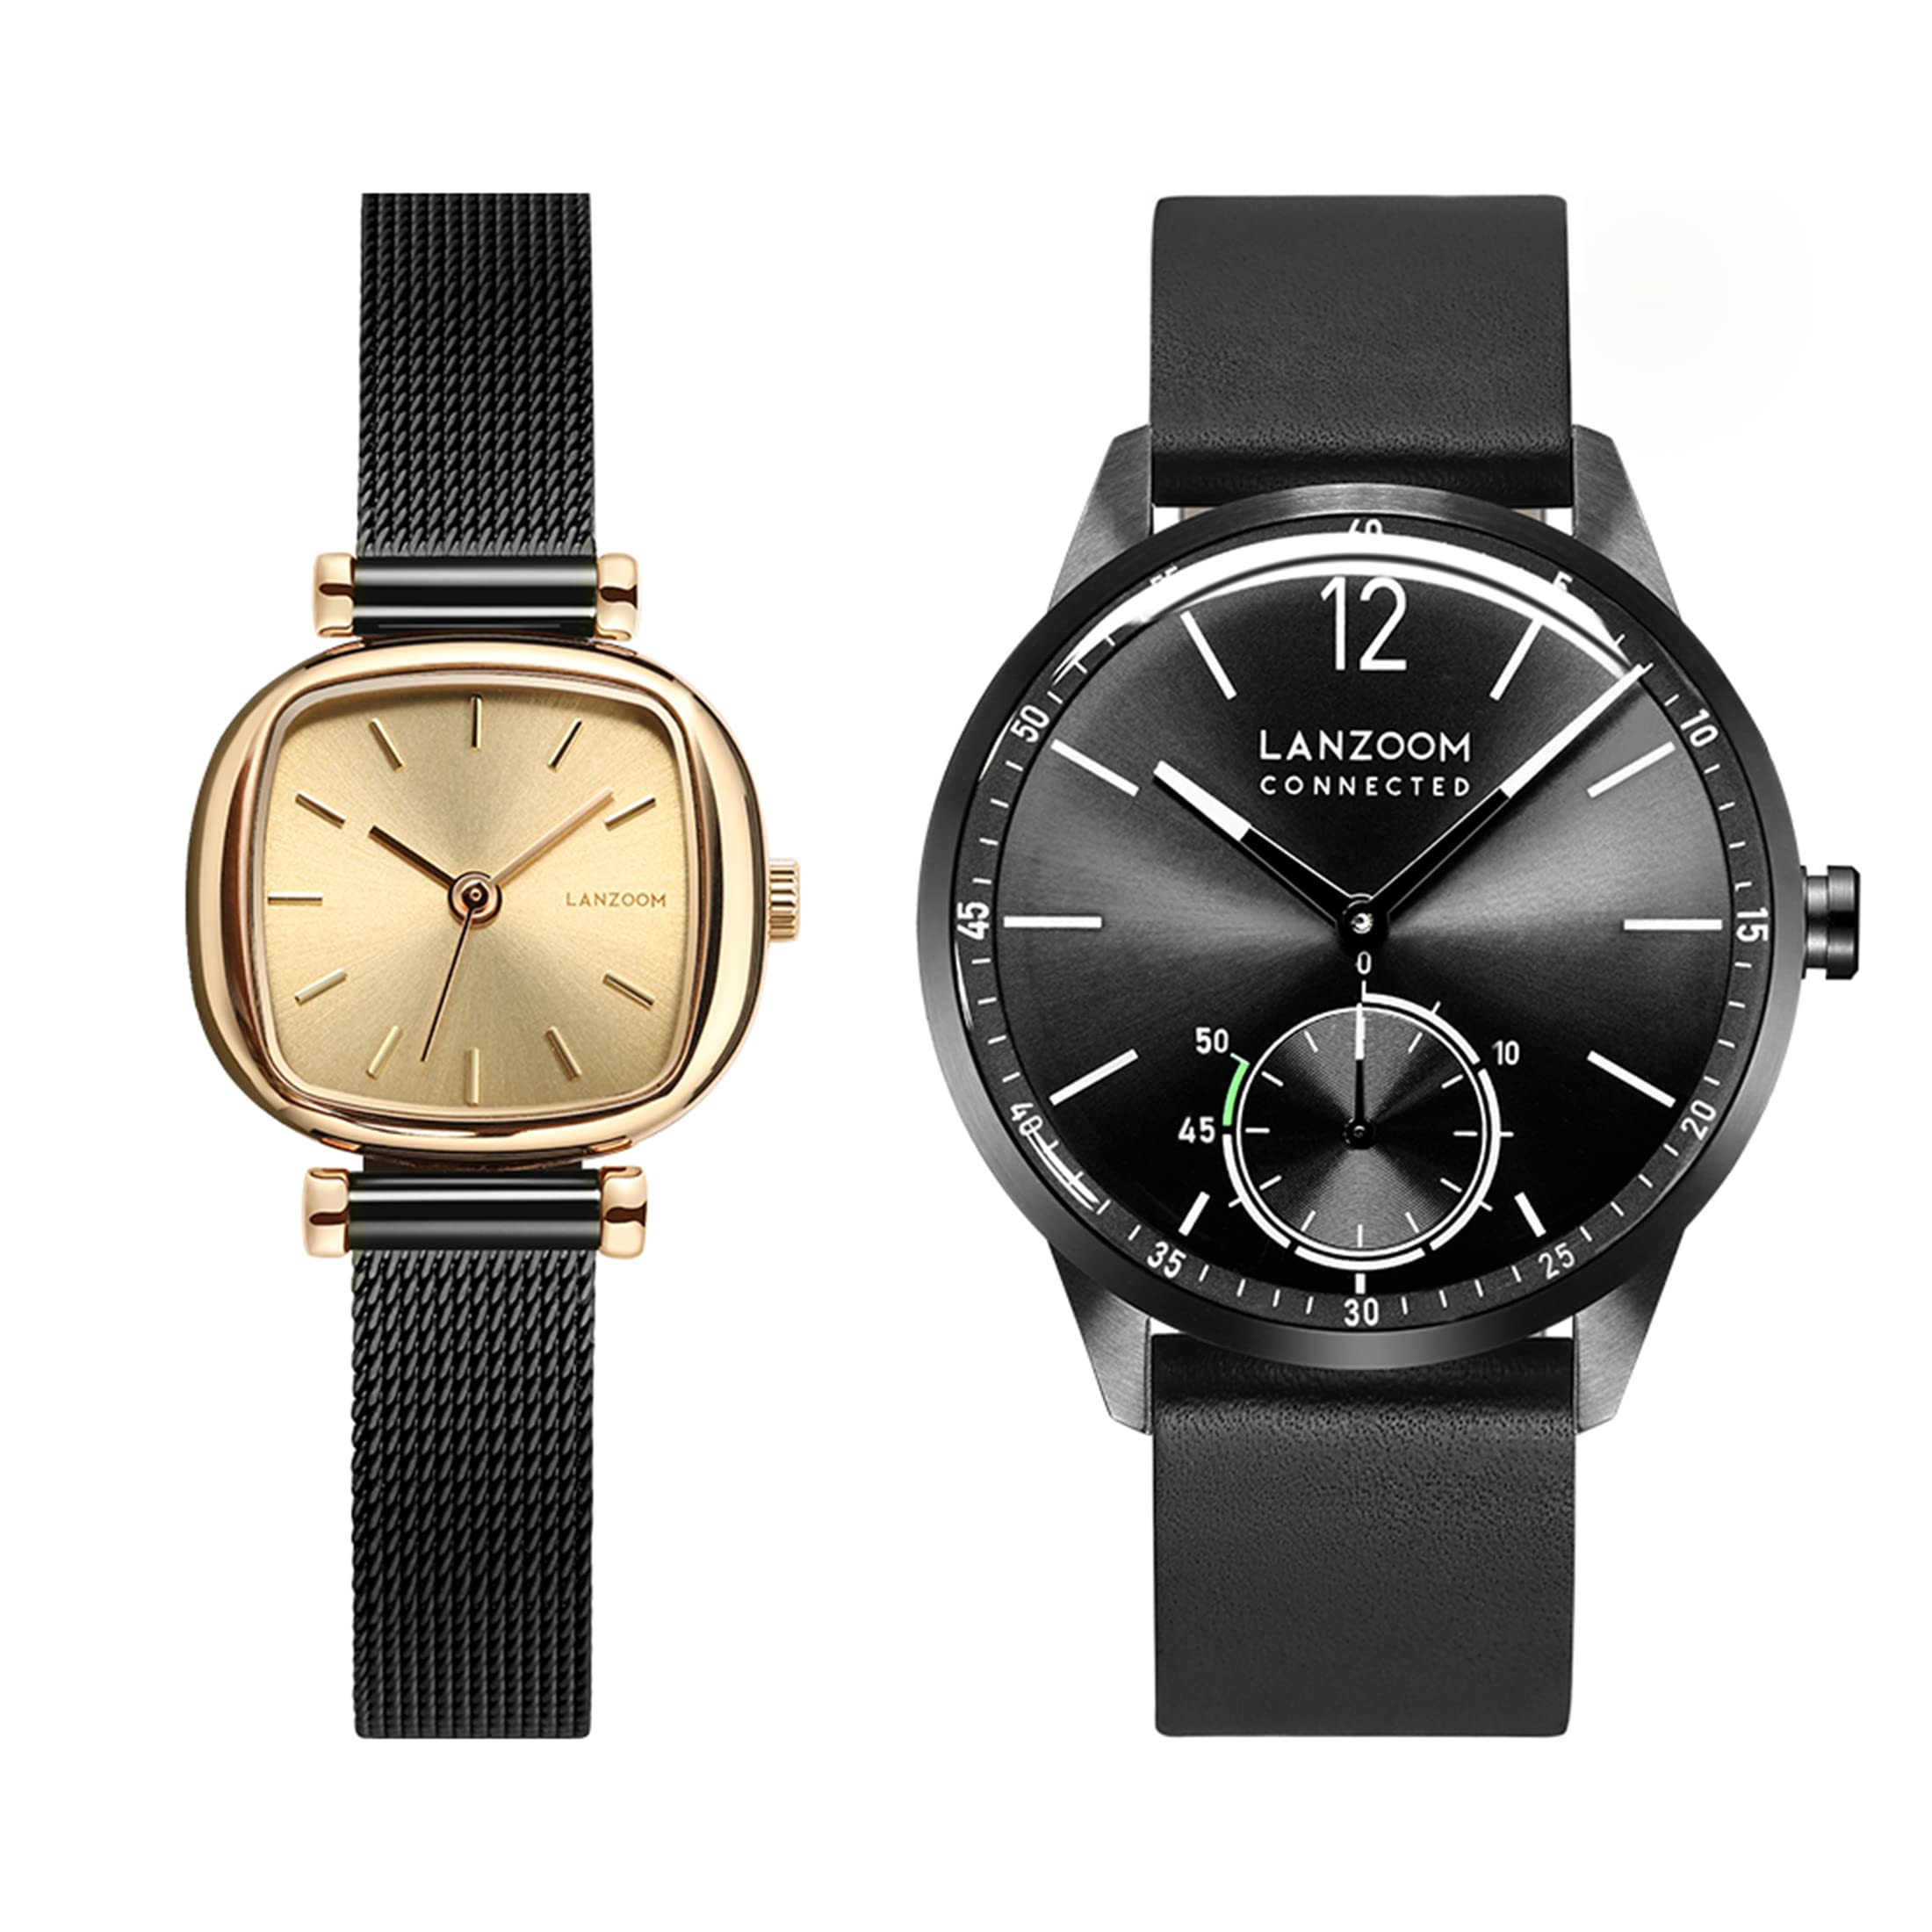 LANZOOM Couple's Time Gold Square Women's Watch + Men's Minimalist Black Watch